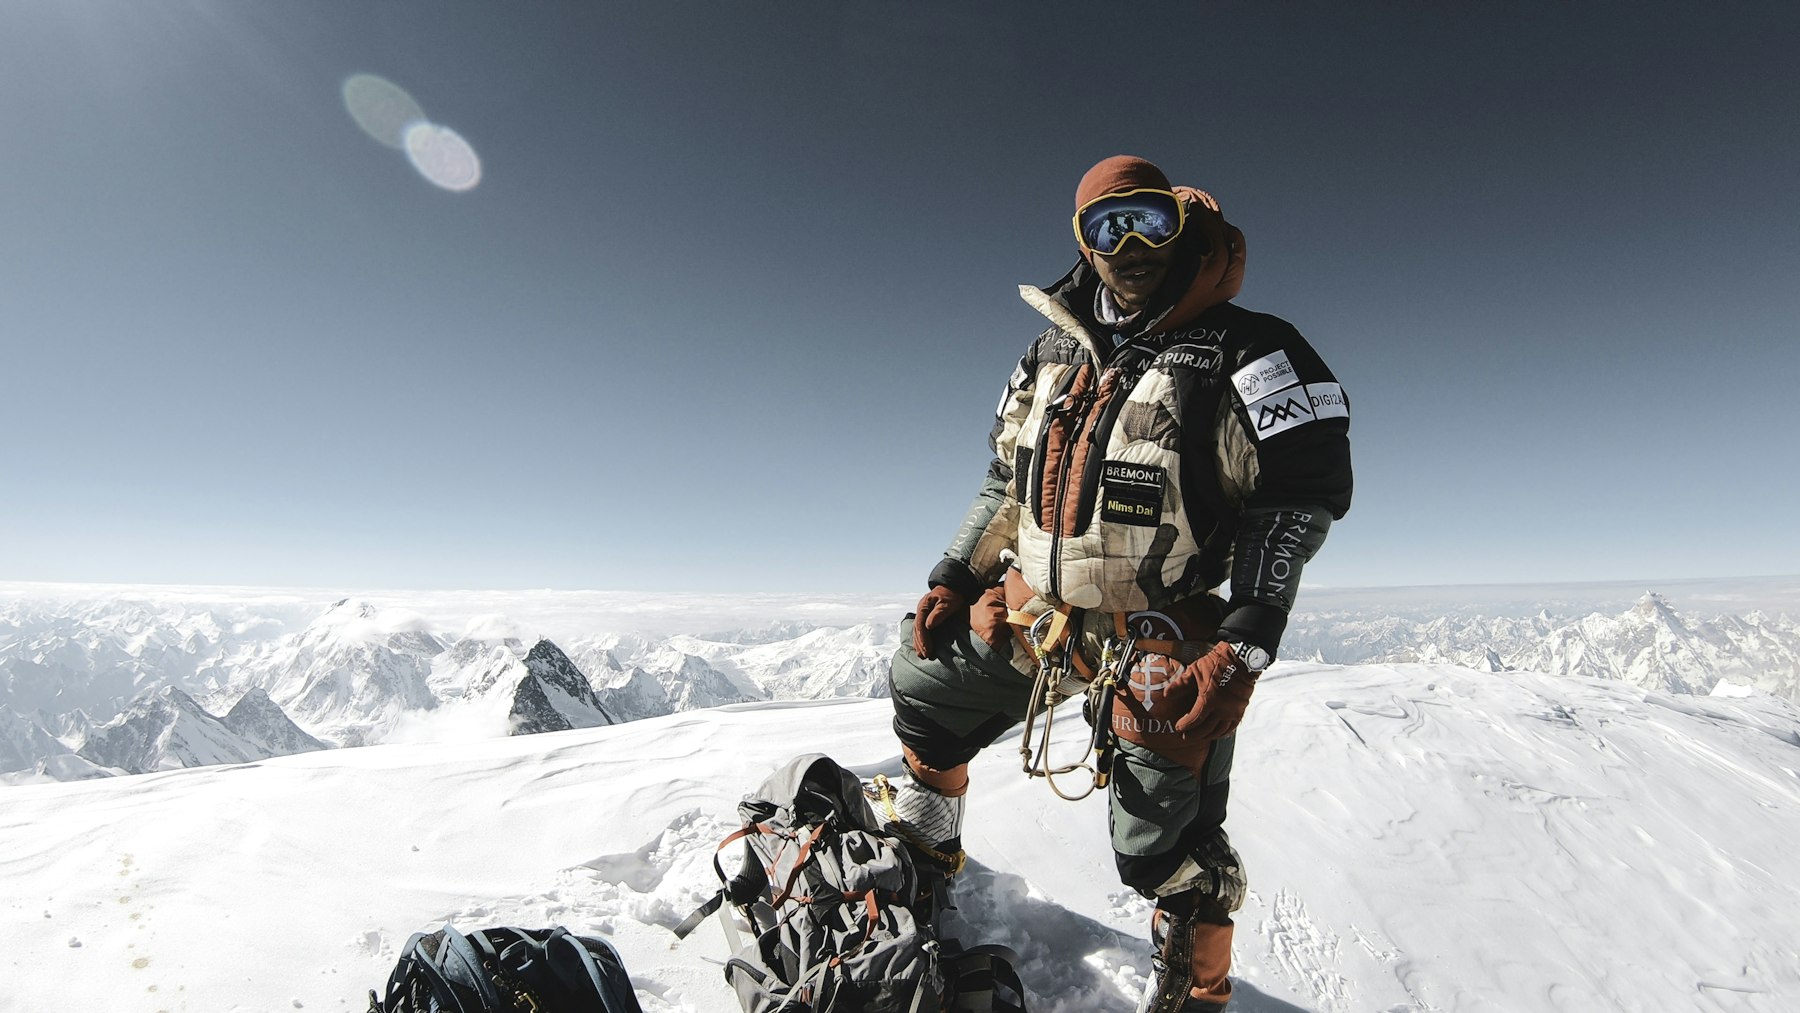 Nimsdai on the summit of K2